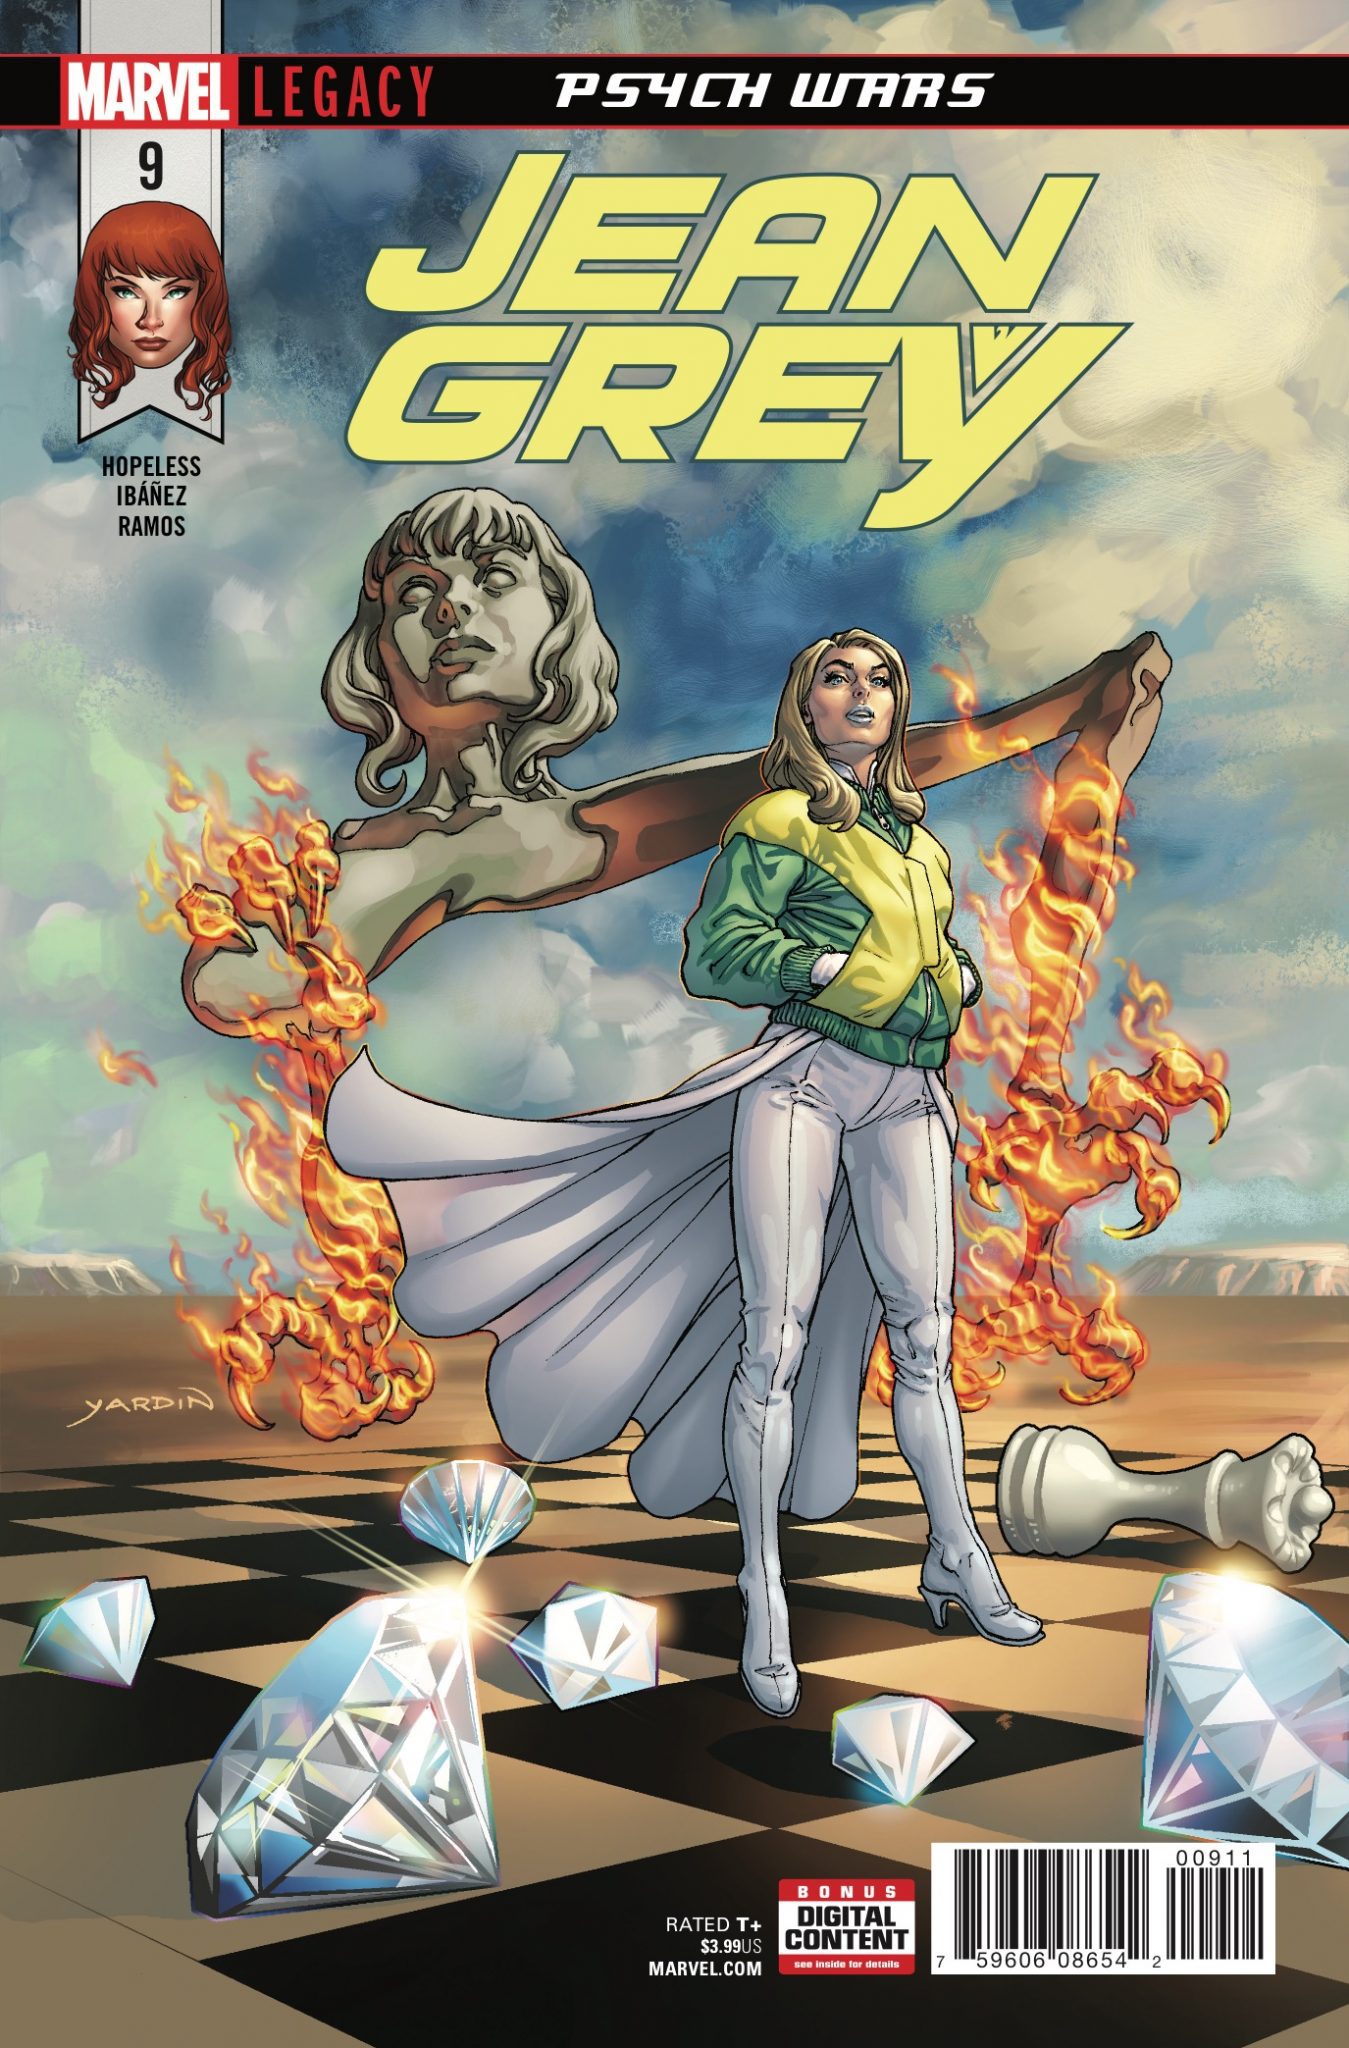 Comic Review: Jean Grey #1-11 (and Phoenix: Resurrection)